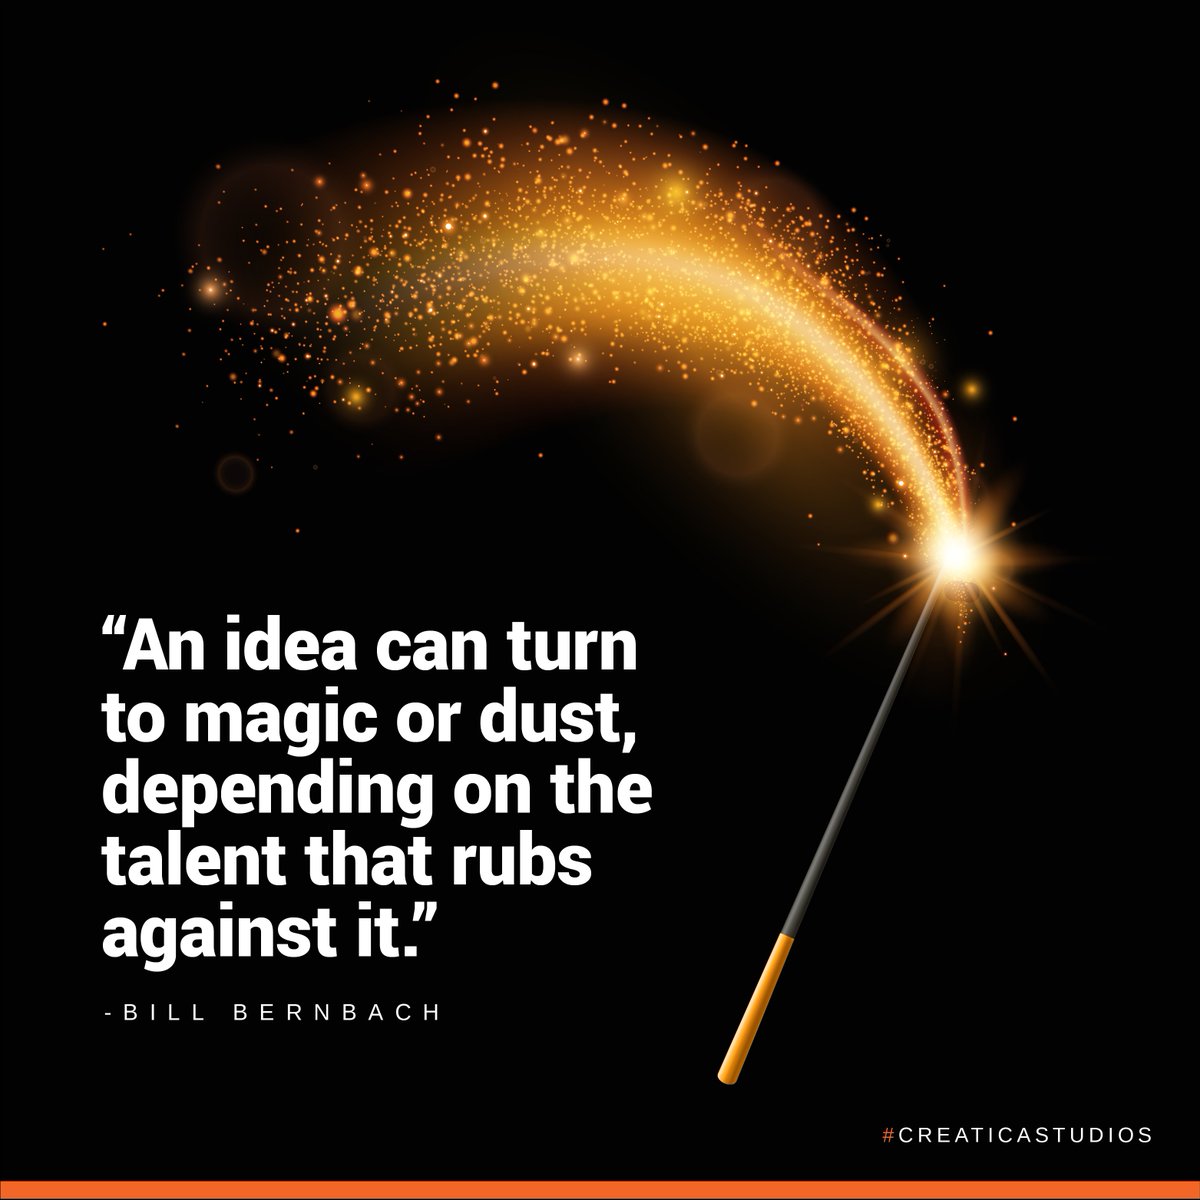 #Imagination #MagicIdeas #DesignInspiration #Talent

#CreaticaStudios #Branding #Creativity